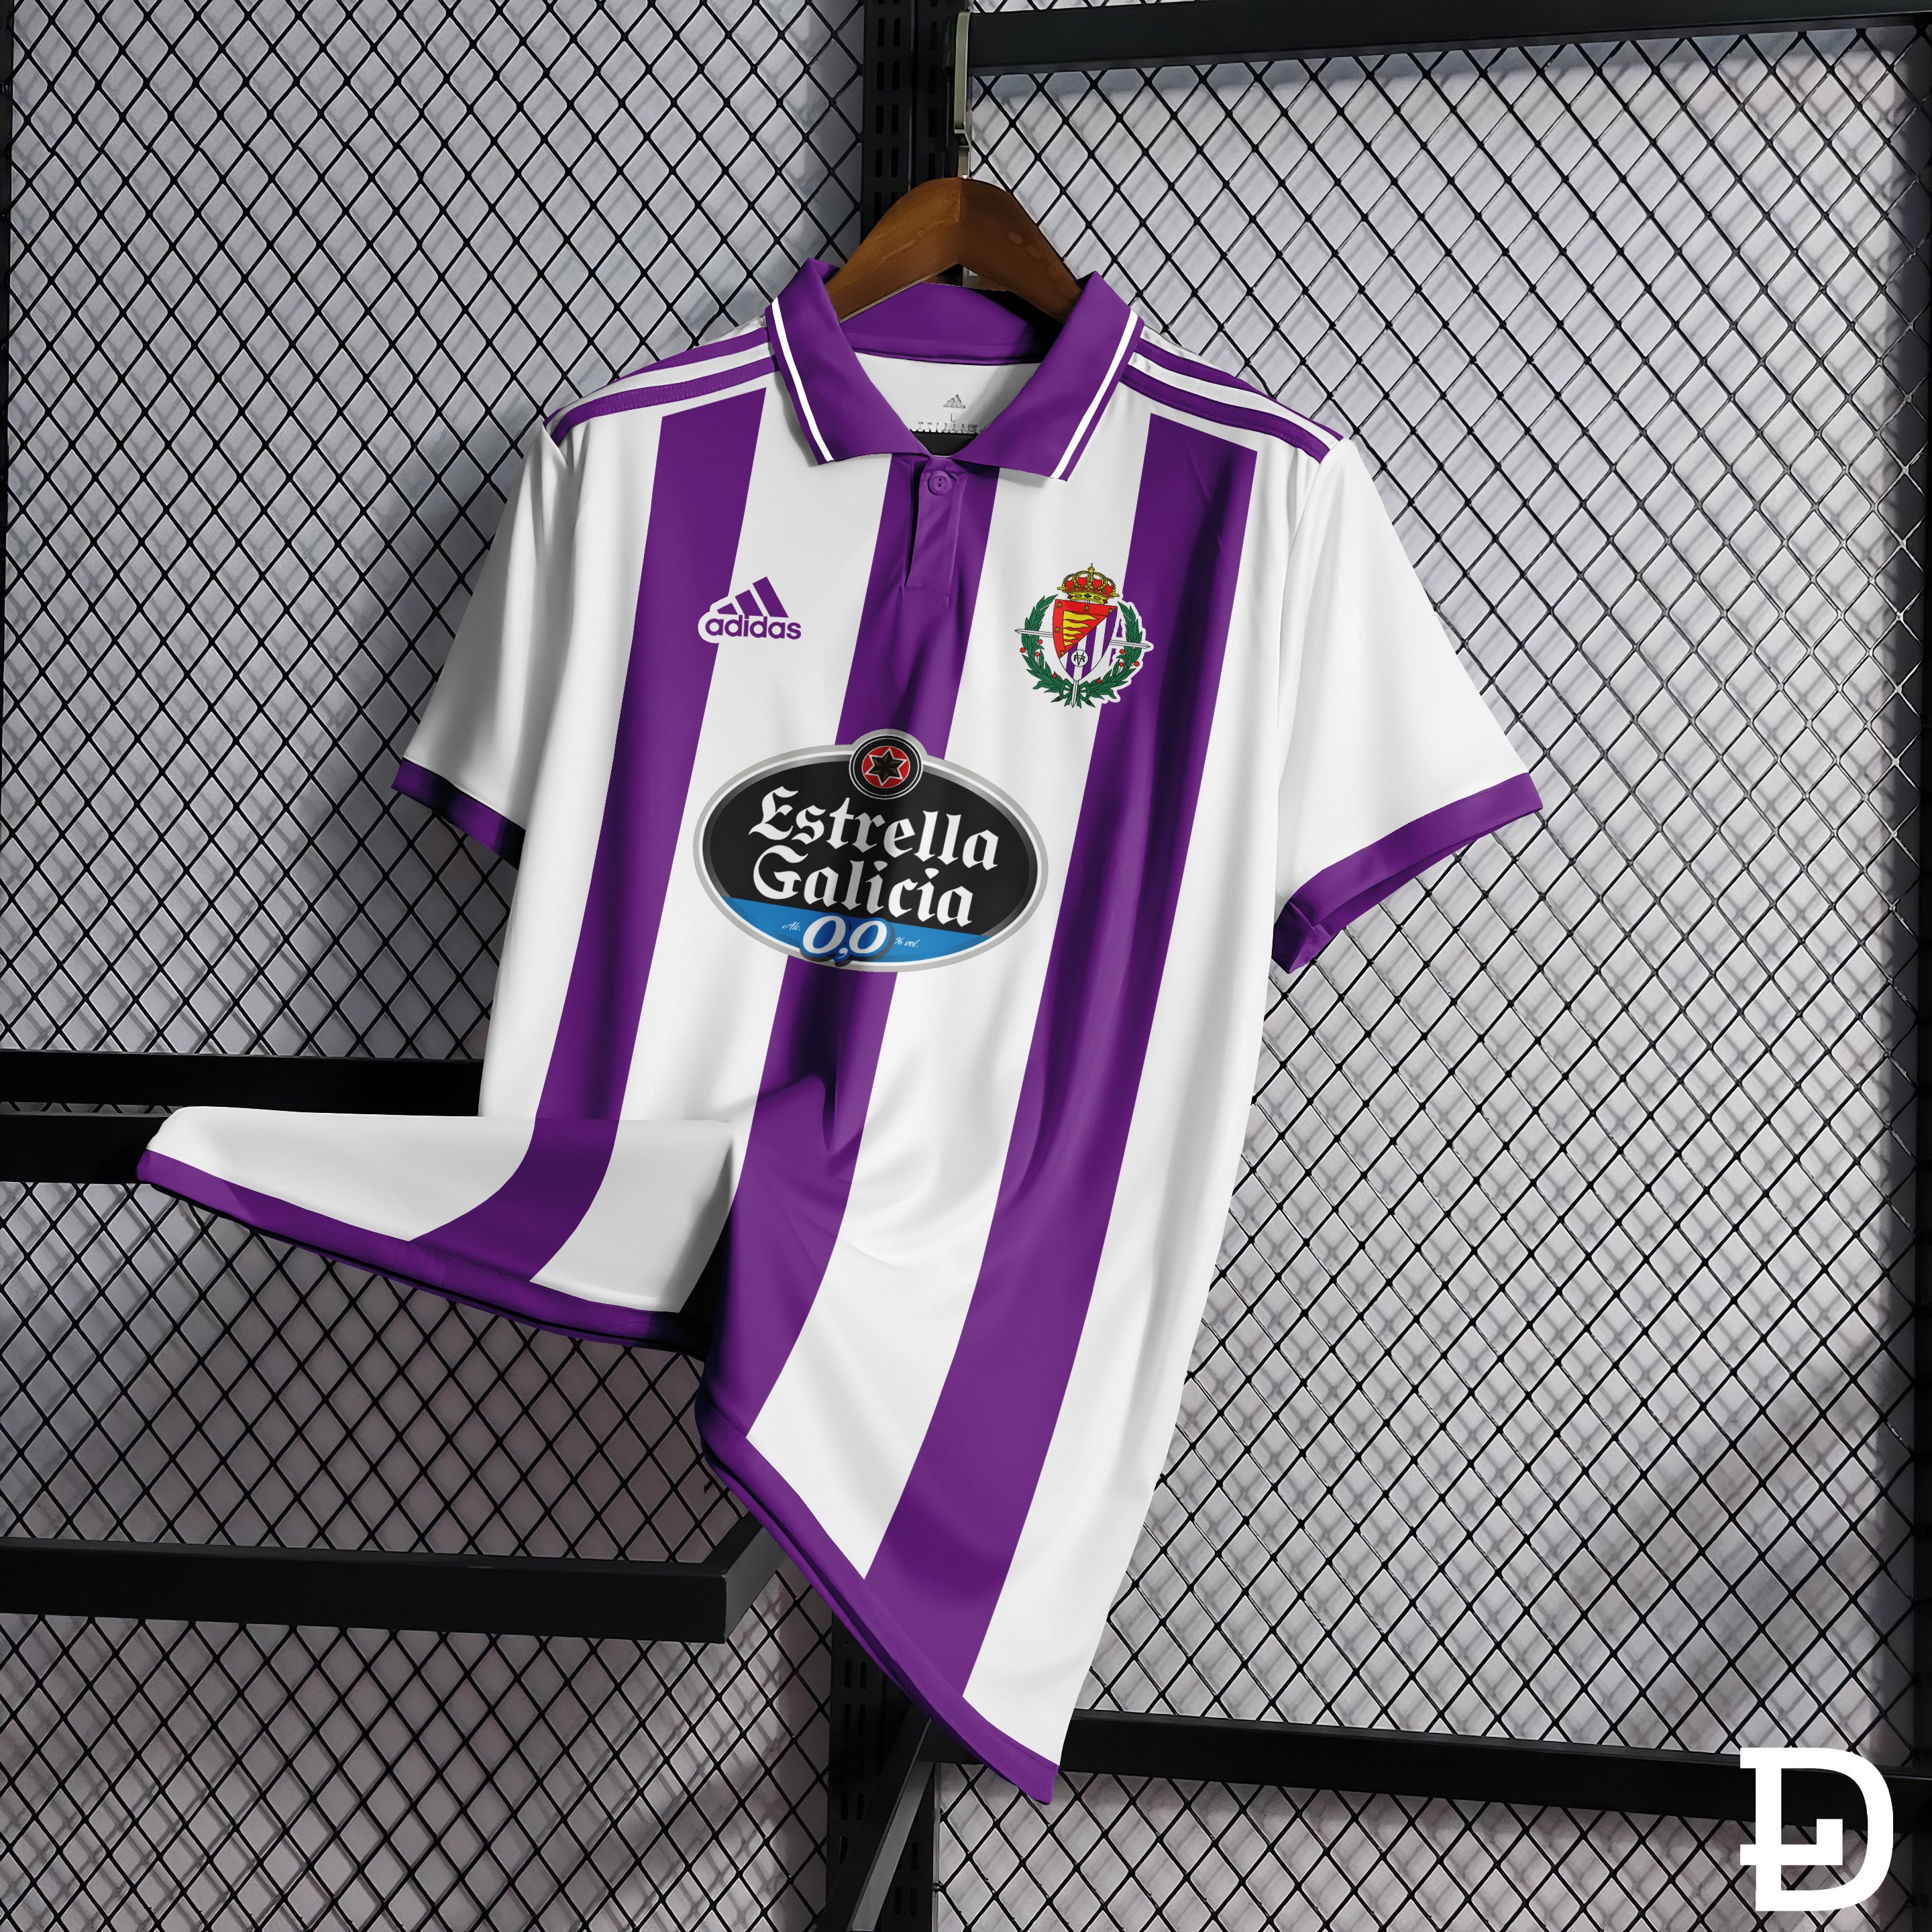 LautaDesign on Twitter: "Real Valladolid CF Home Kit Concept 2022/23 # RealValladolid #RVCF #Valladolid #pucela #adidas #AdidasFootball #Football https://t.co/Js1Kbm3DbP" /